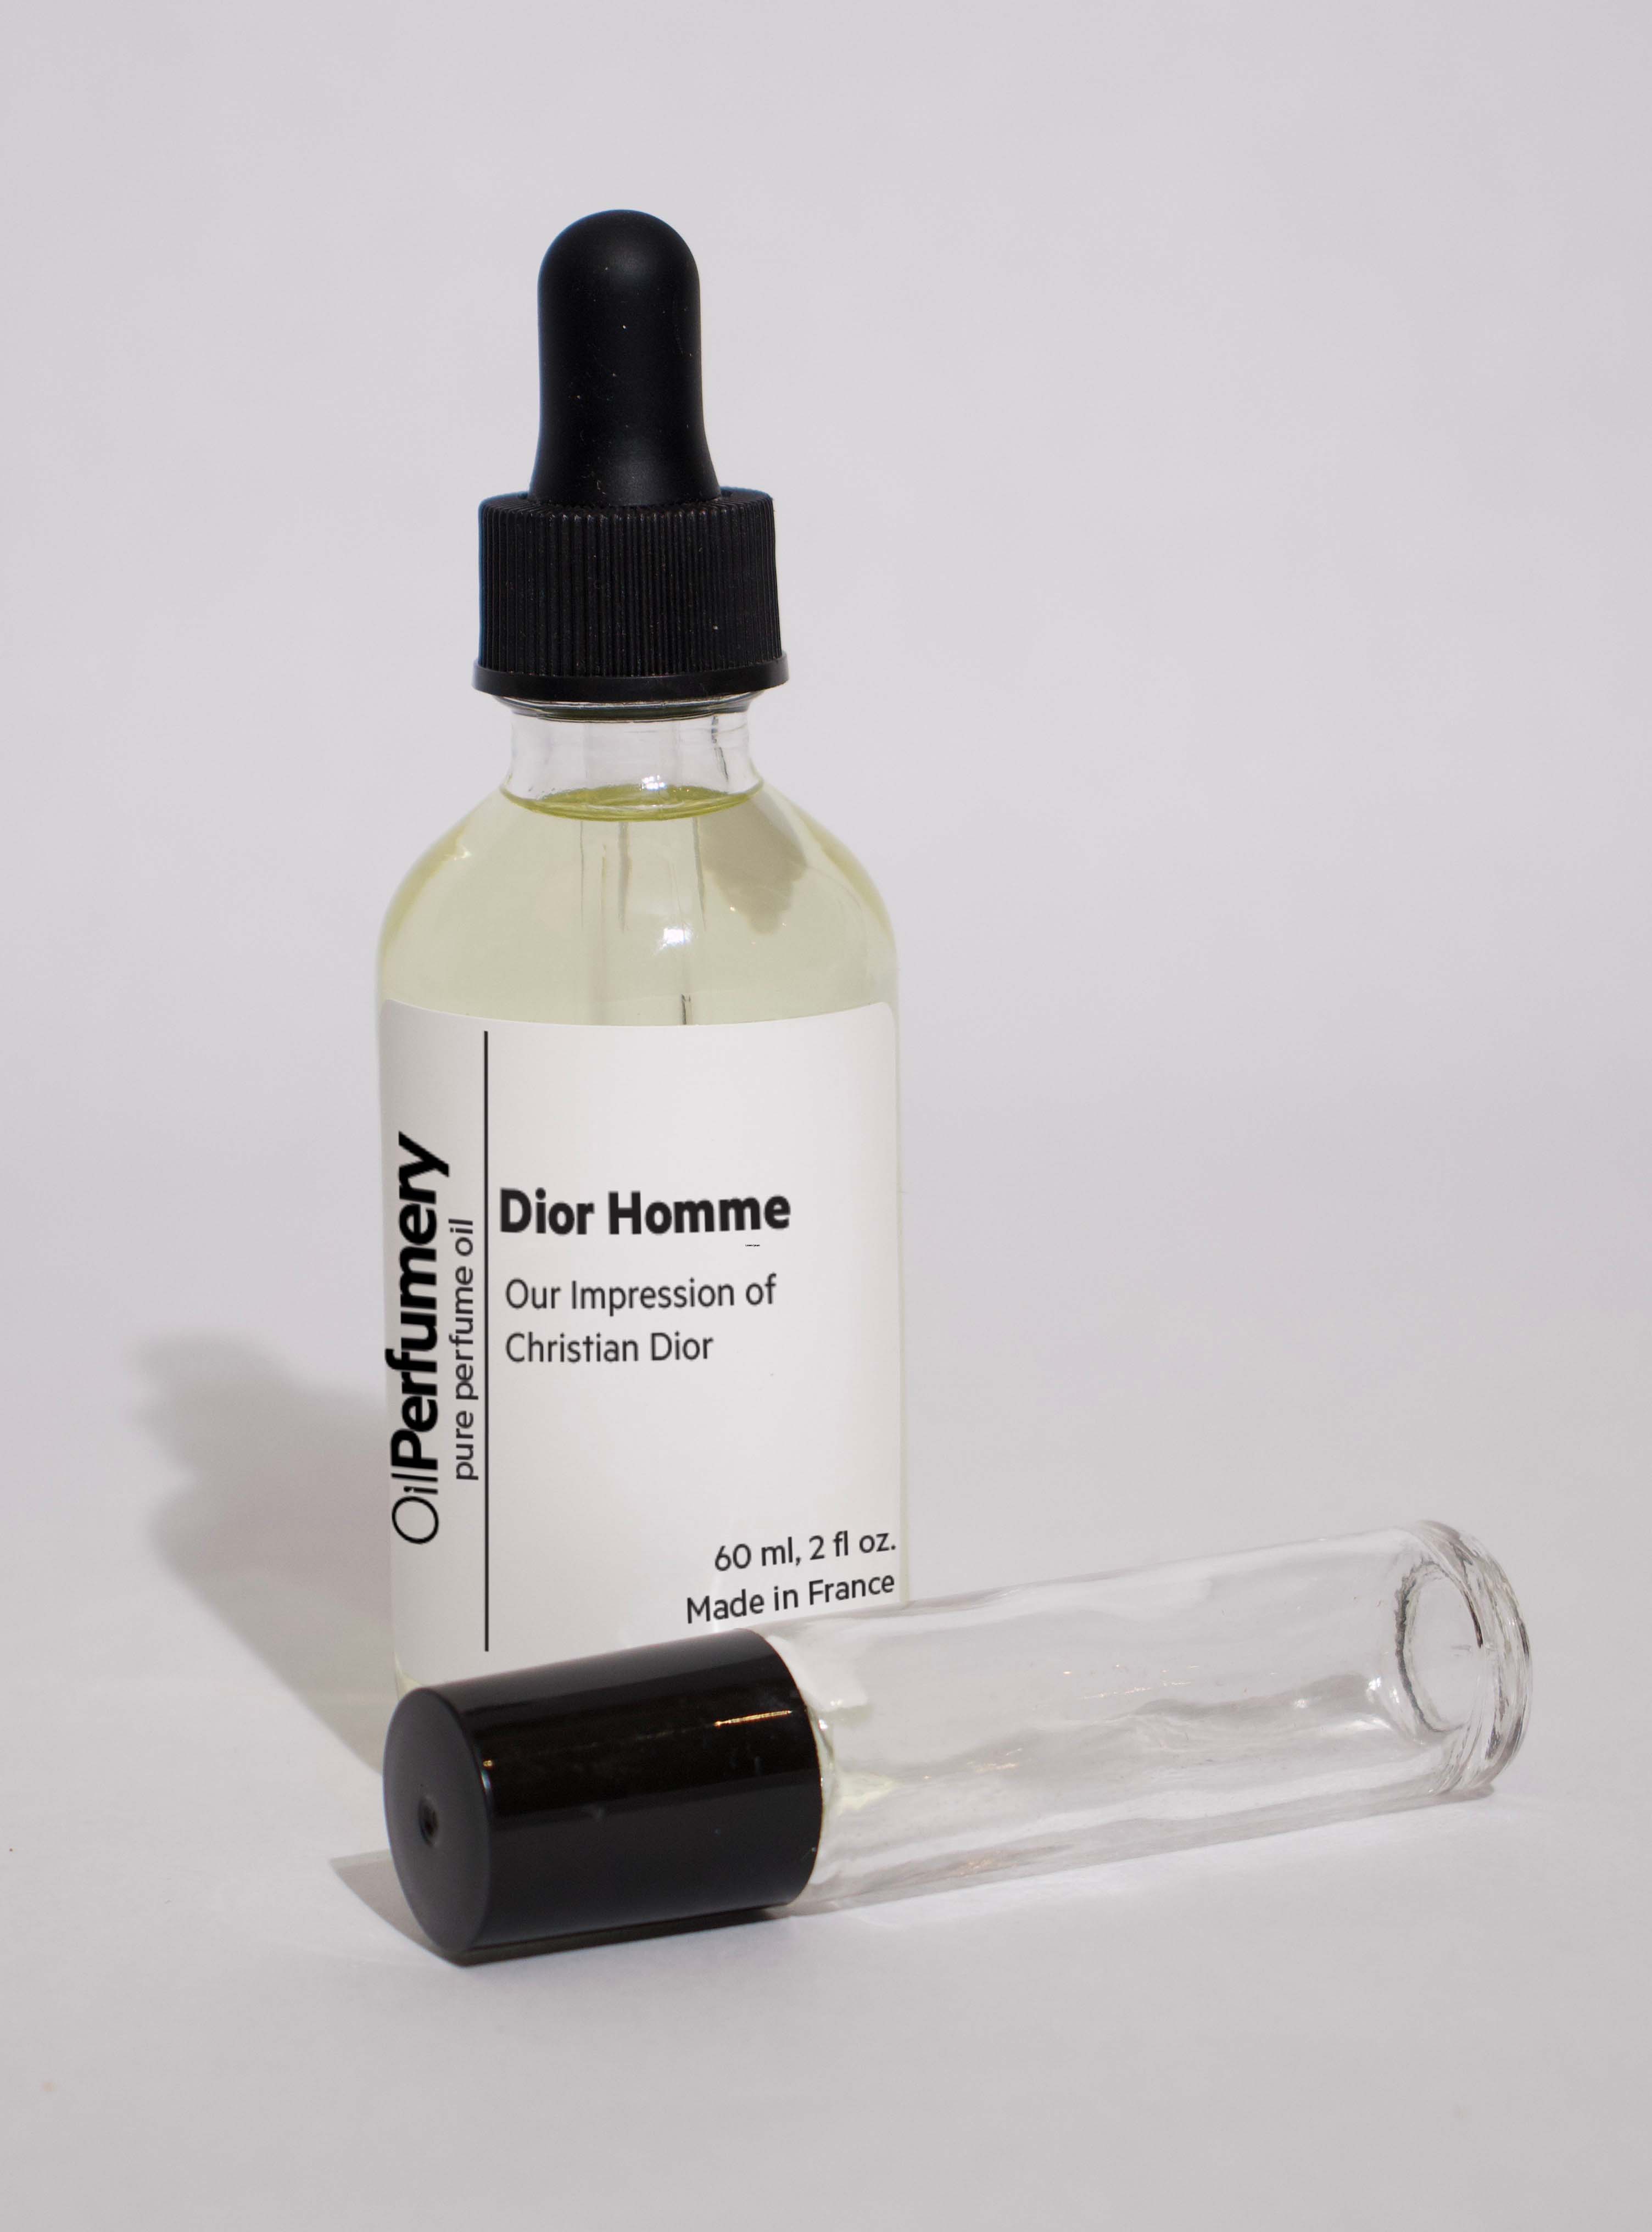 Amazoncom  Dior Homme by Christian Dior for Men 34 oz Eau de Toilette  Spray  After Shave Gels  Beauty  Personal Care